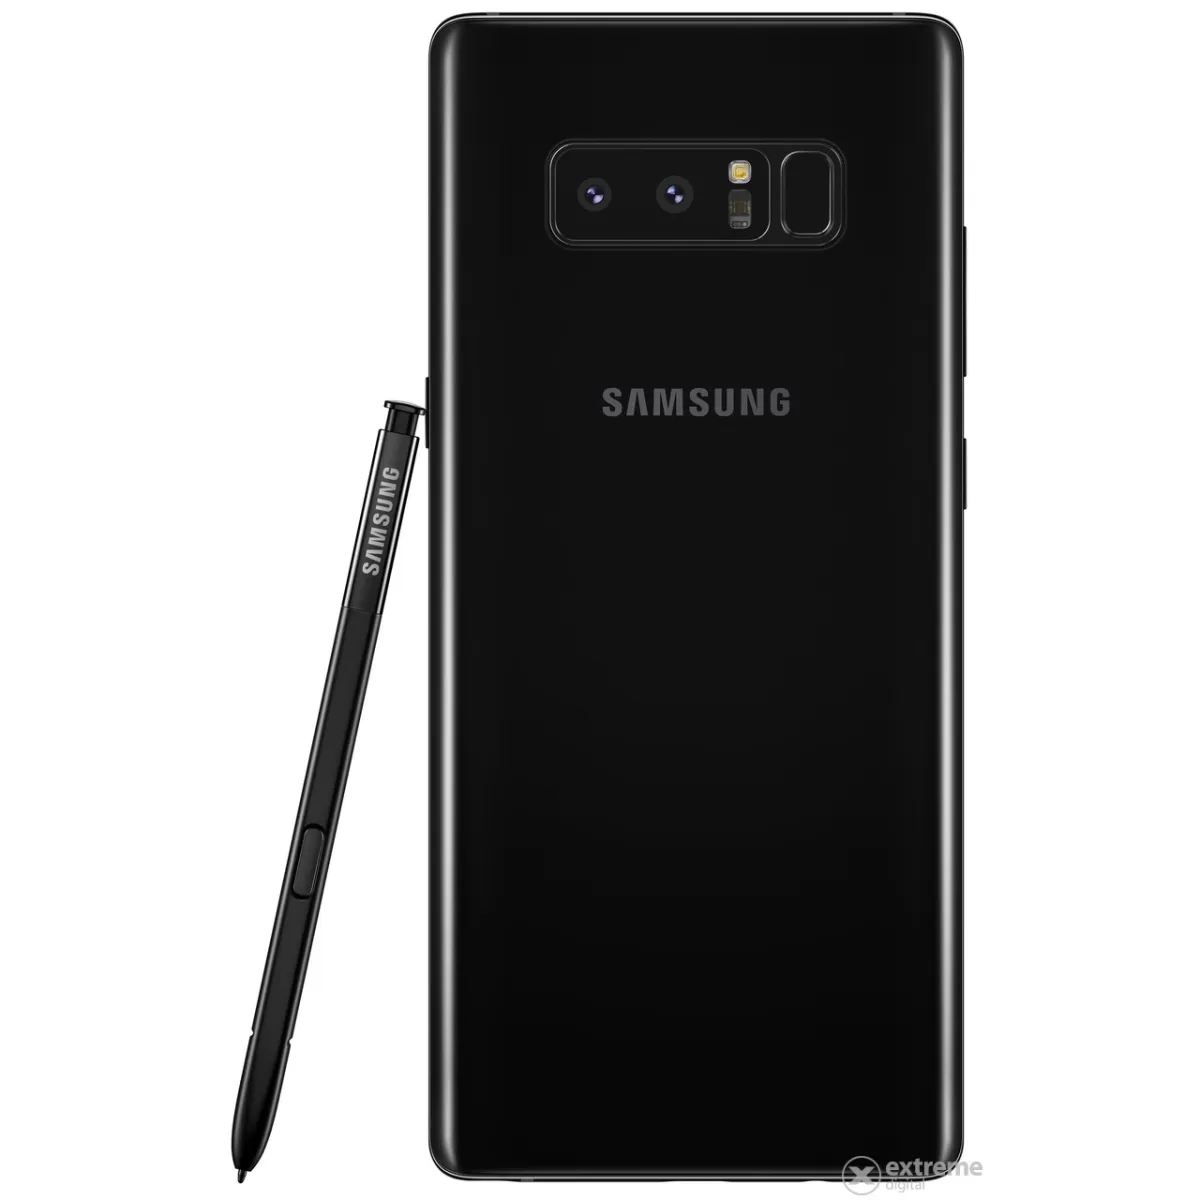 Смартфон Smartphone Samsung SMN950F GALAXY Note 8, 64GB, Black